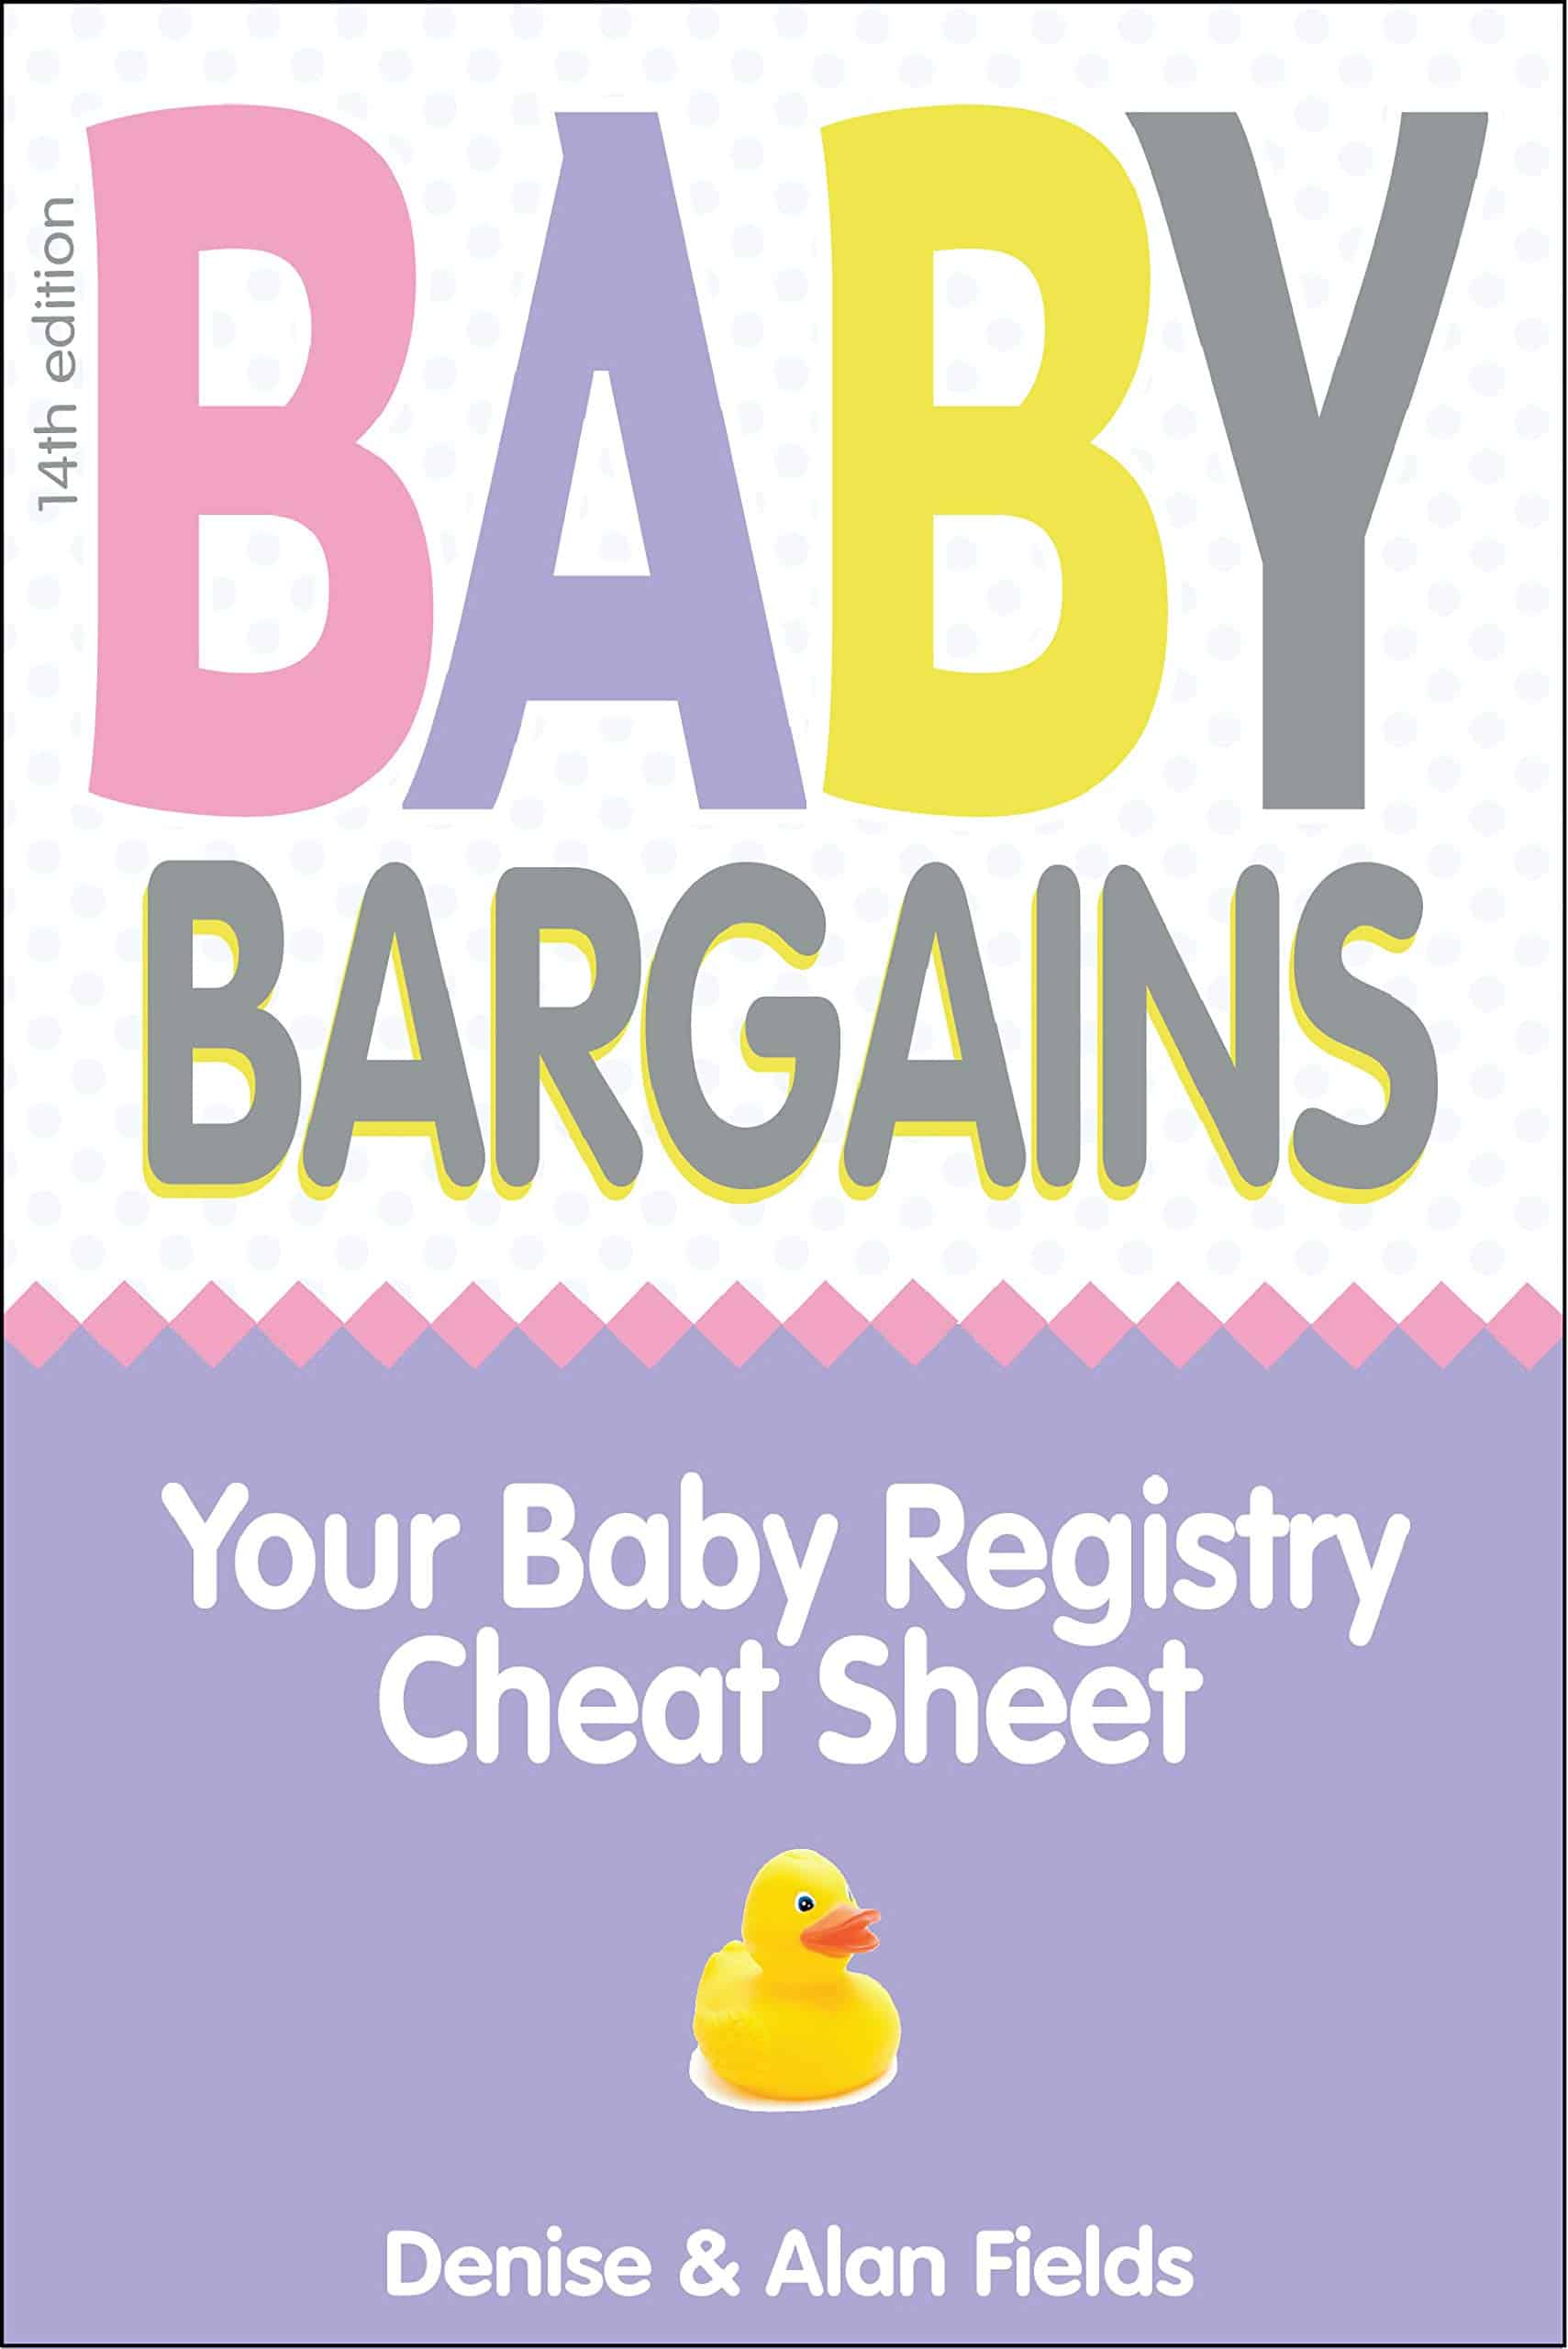 Baby Bargains 14e cover